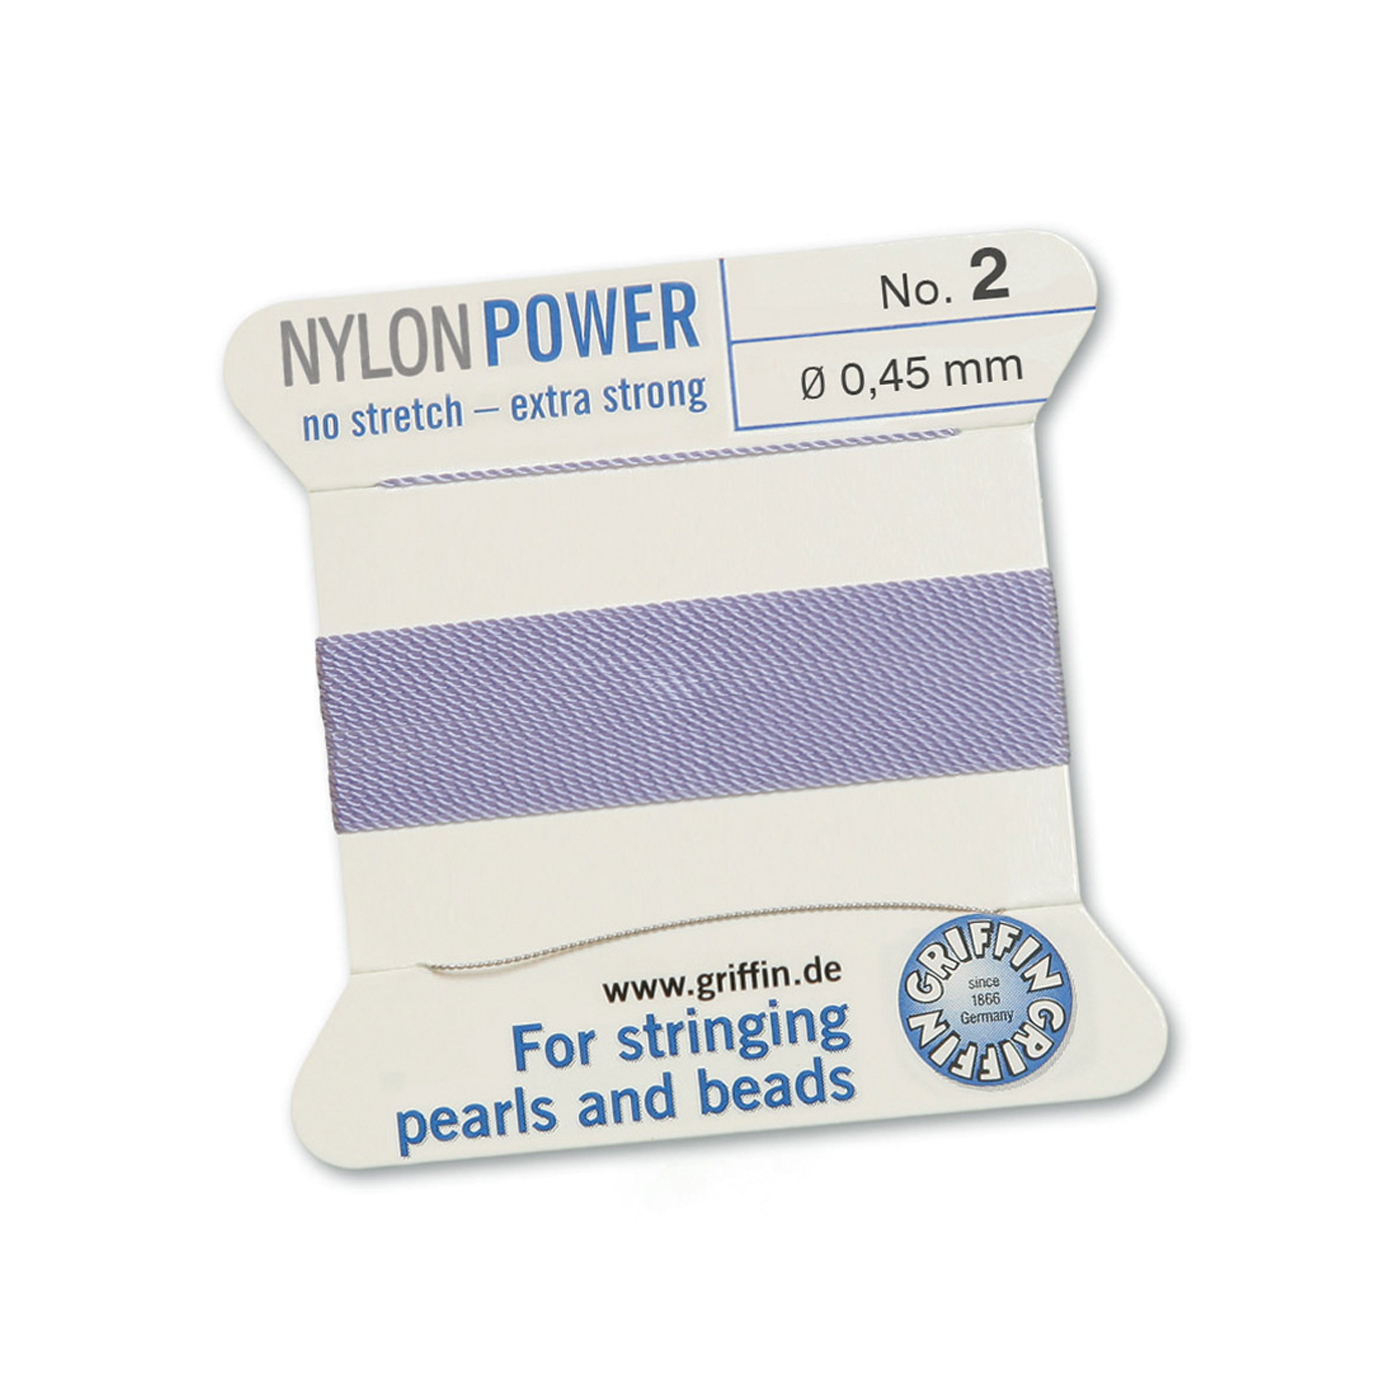 Bead Cord NylonPower, Violet, No. 2 - 2 m